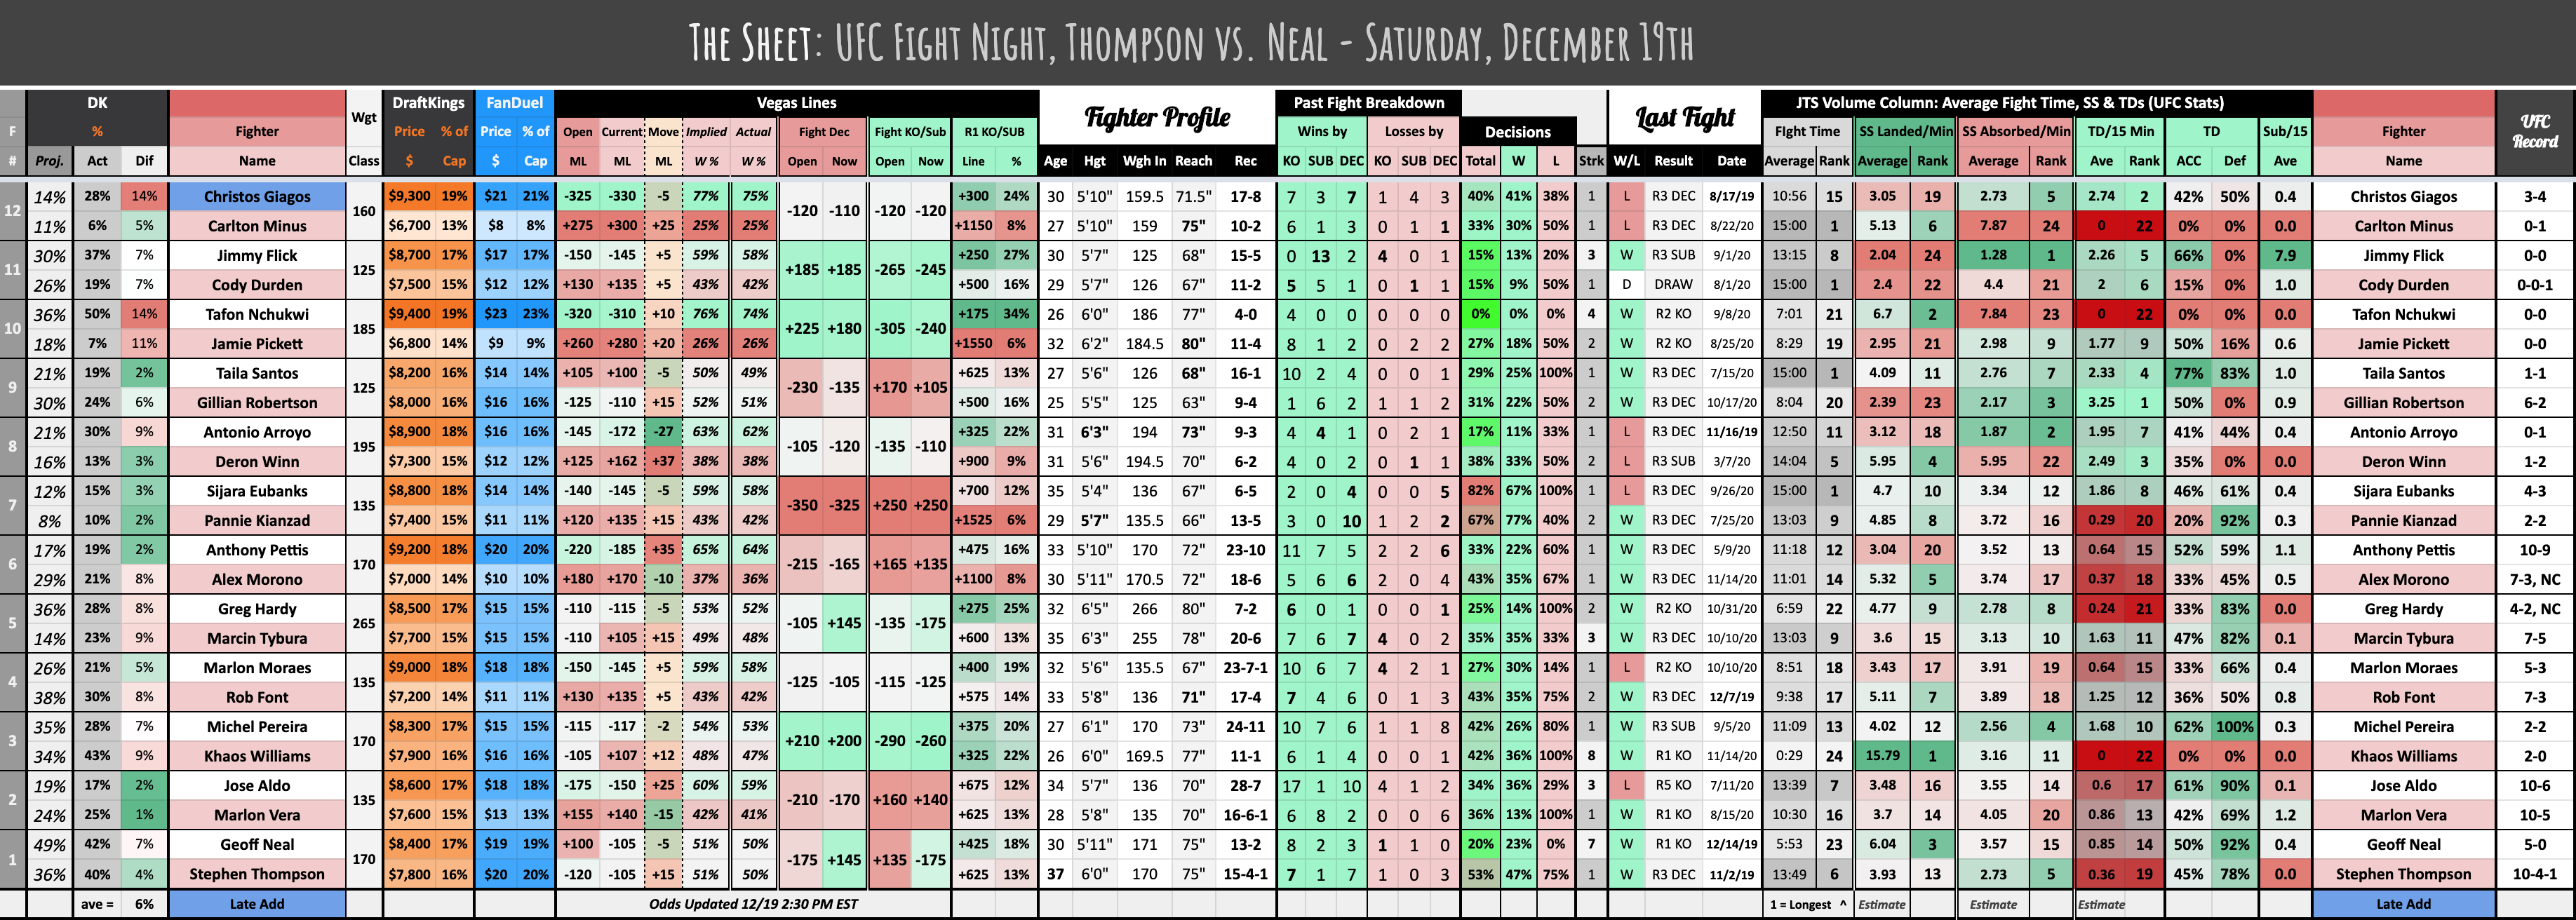 The Sheet: UFC Fight Night, Thompson vs. Neal - Saturday, December 19th